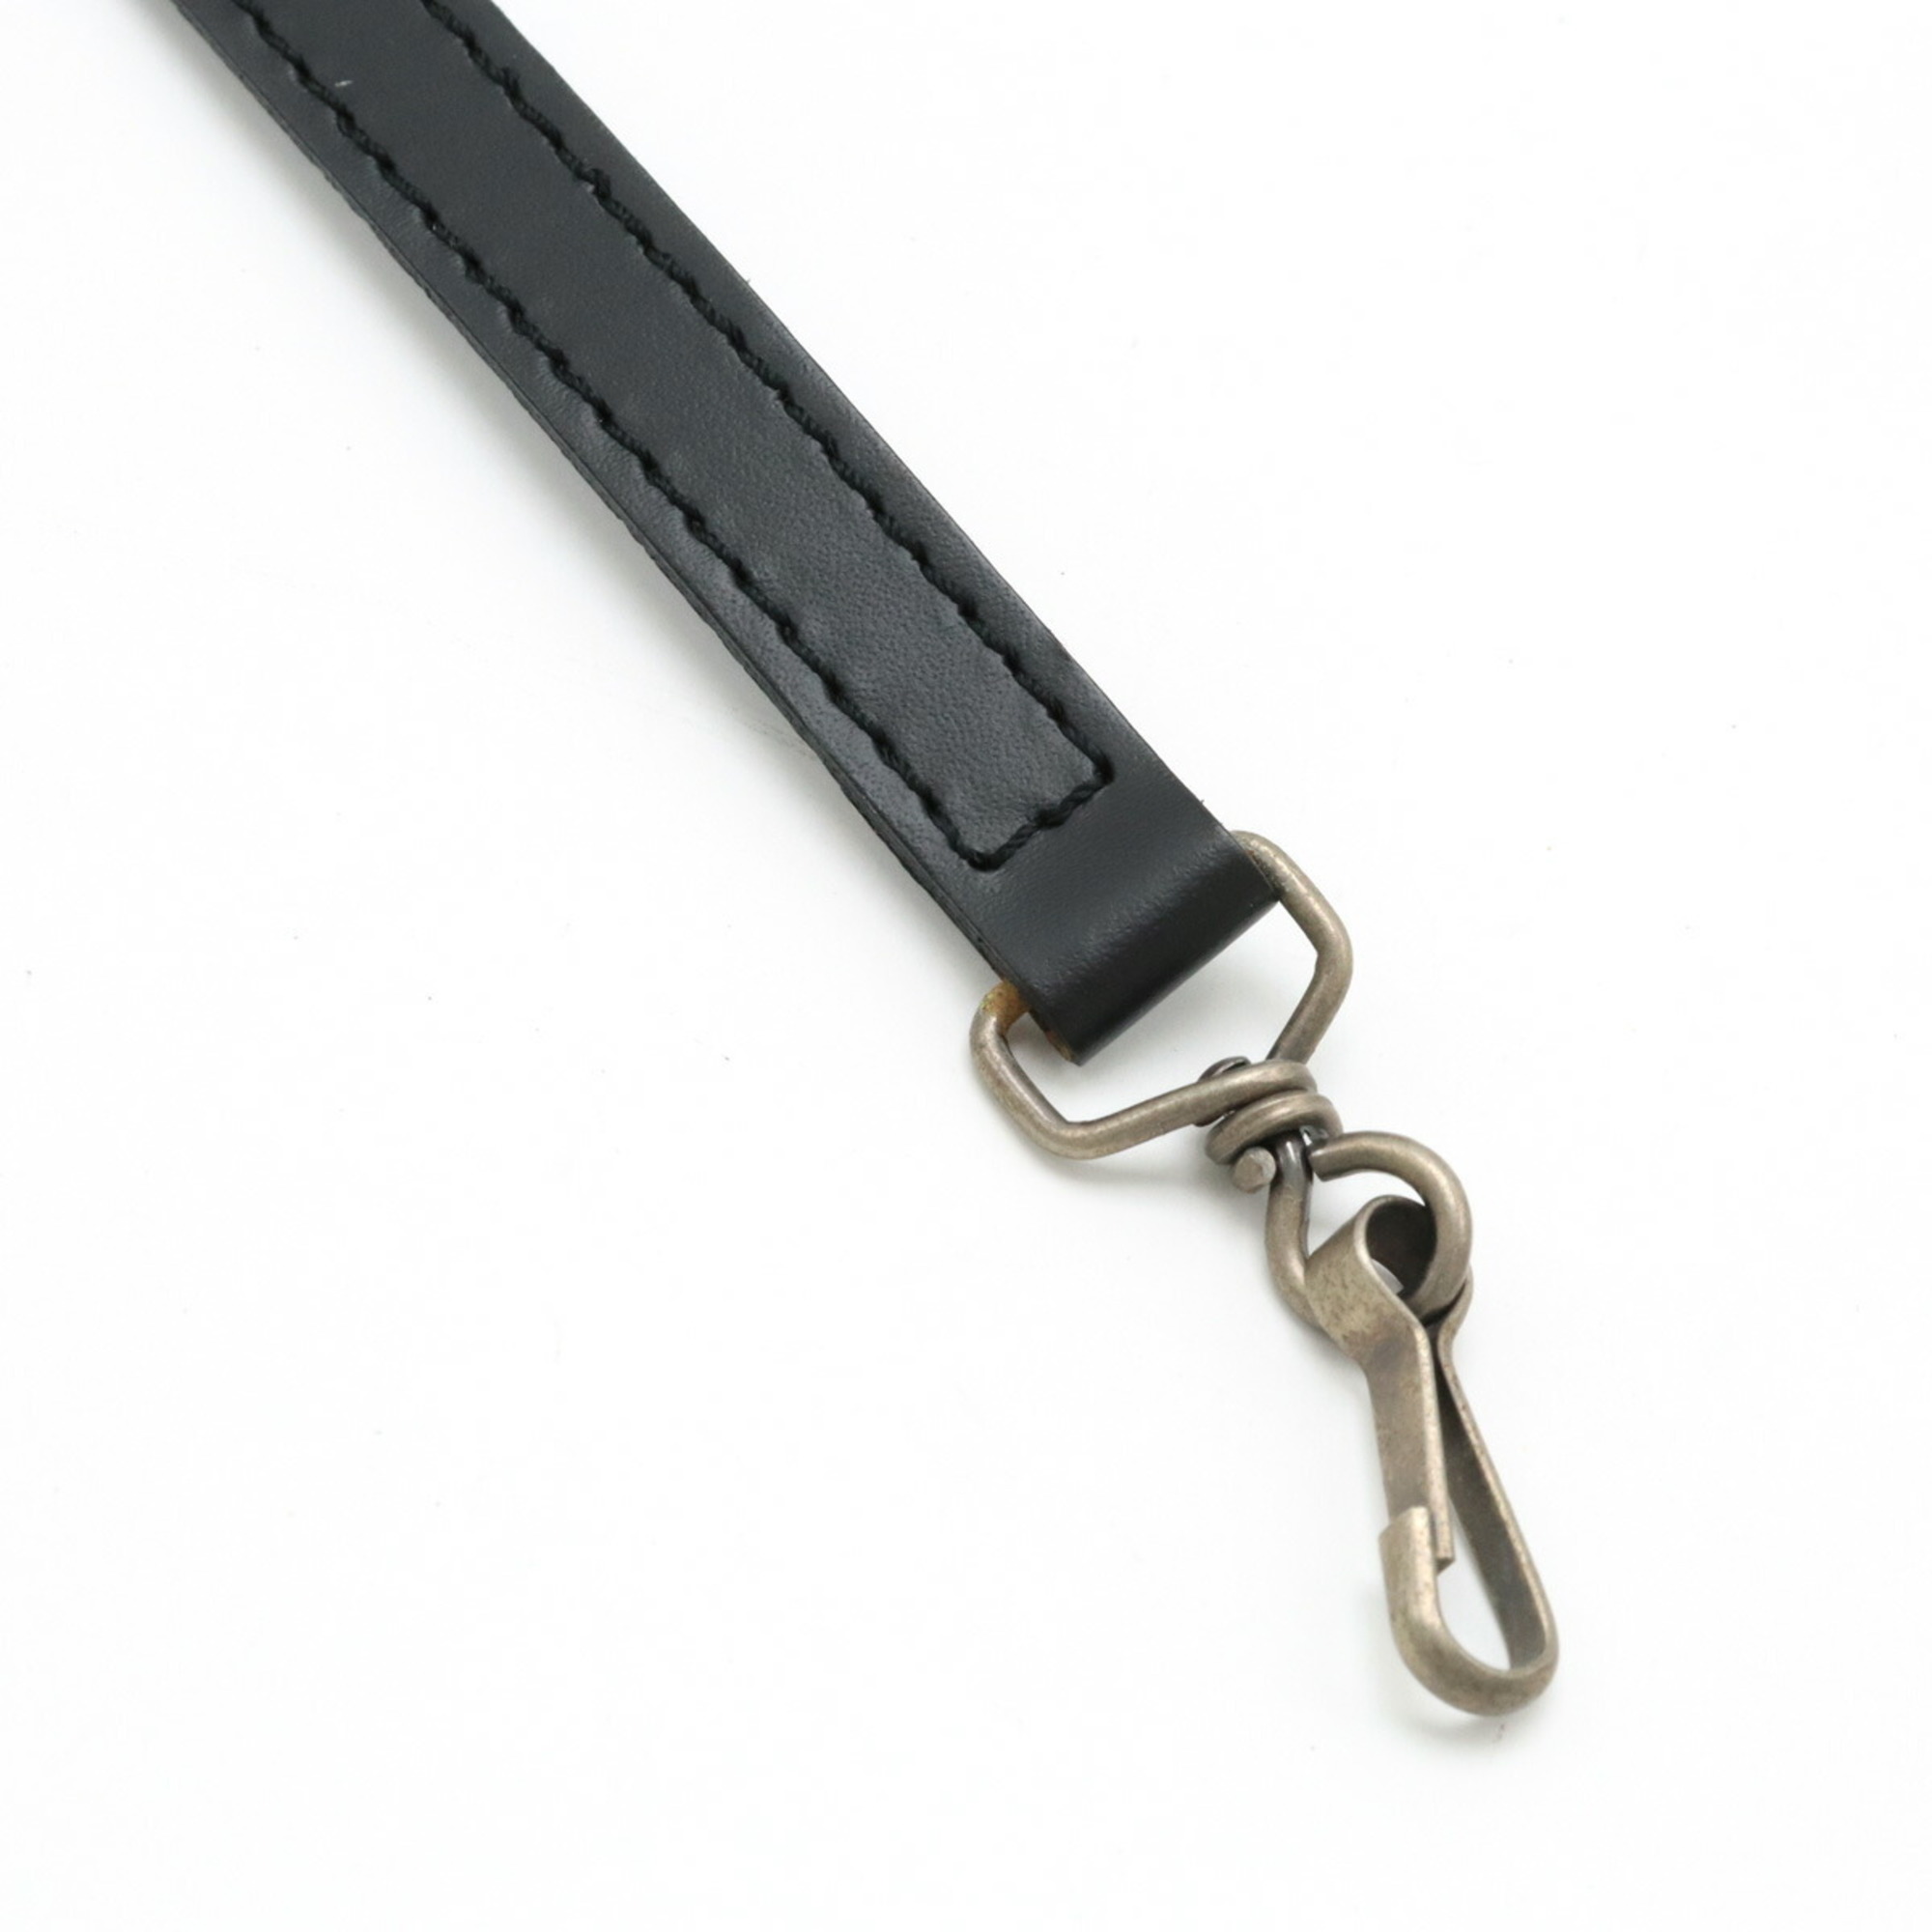 LOUIS VUITTON Epi Sacado Shoulder Bag Leather Noir Black M80153